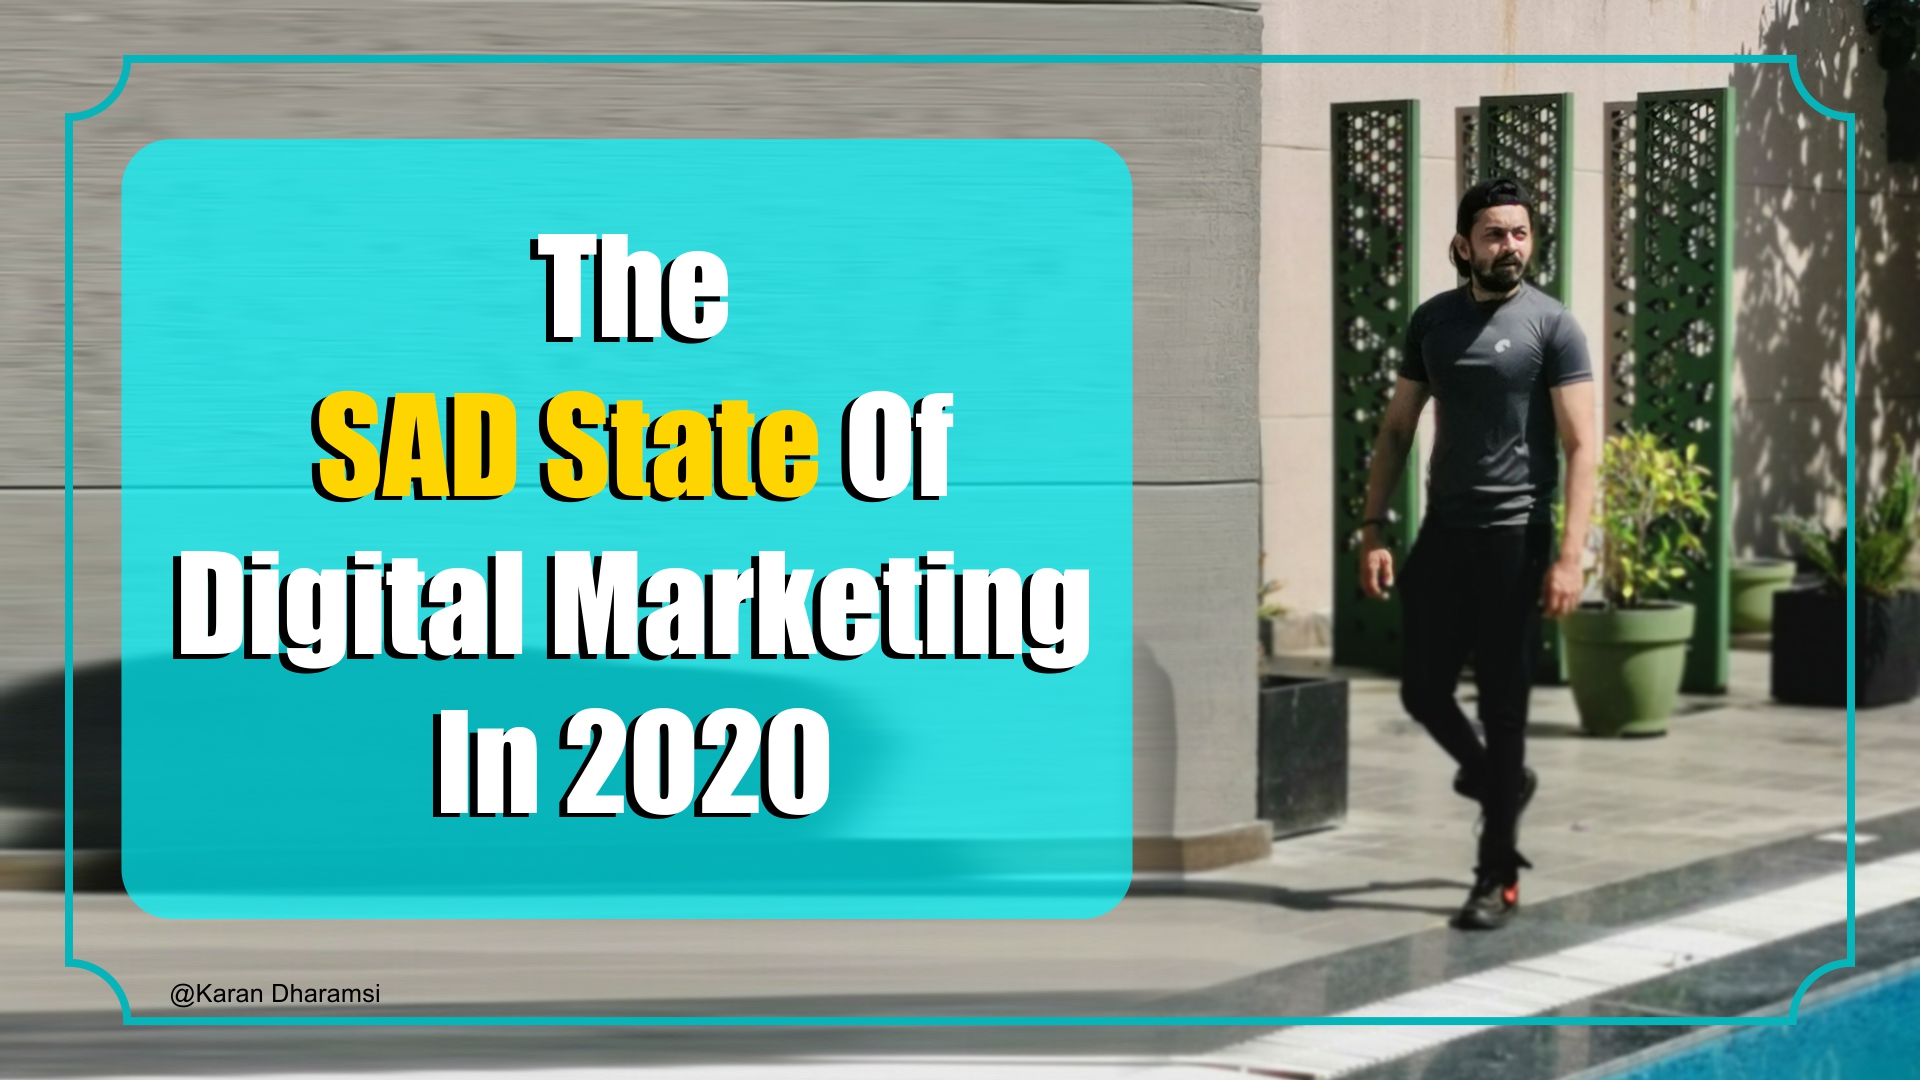 Sad State Digital Marketing India 2020 Karan Dharamsi The Marketing Nerdz